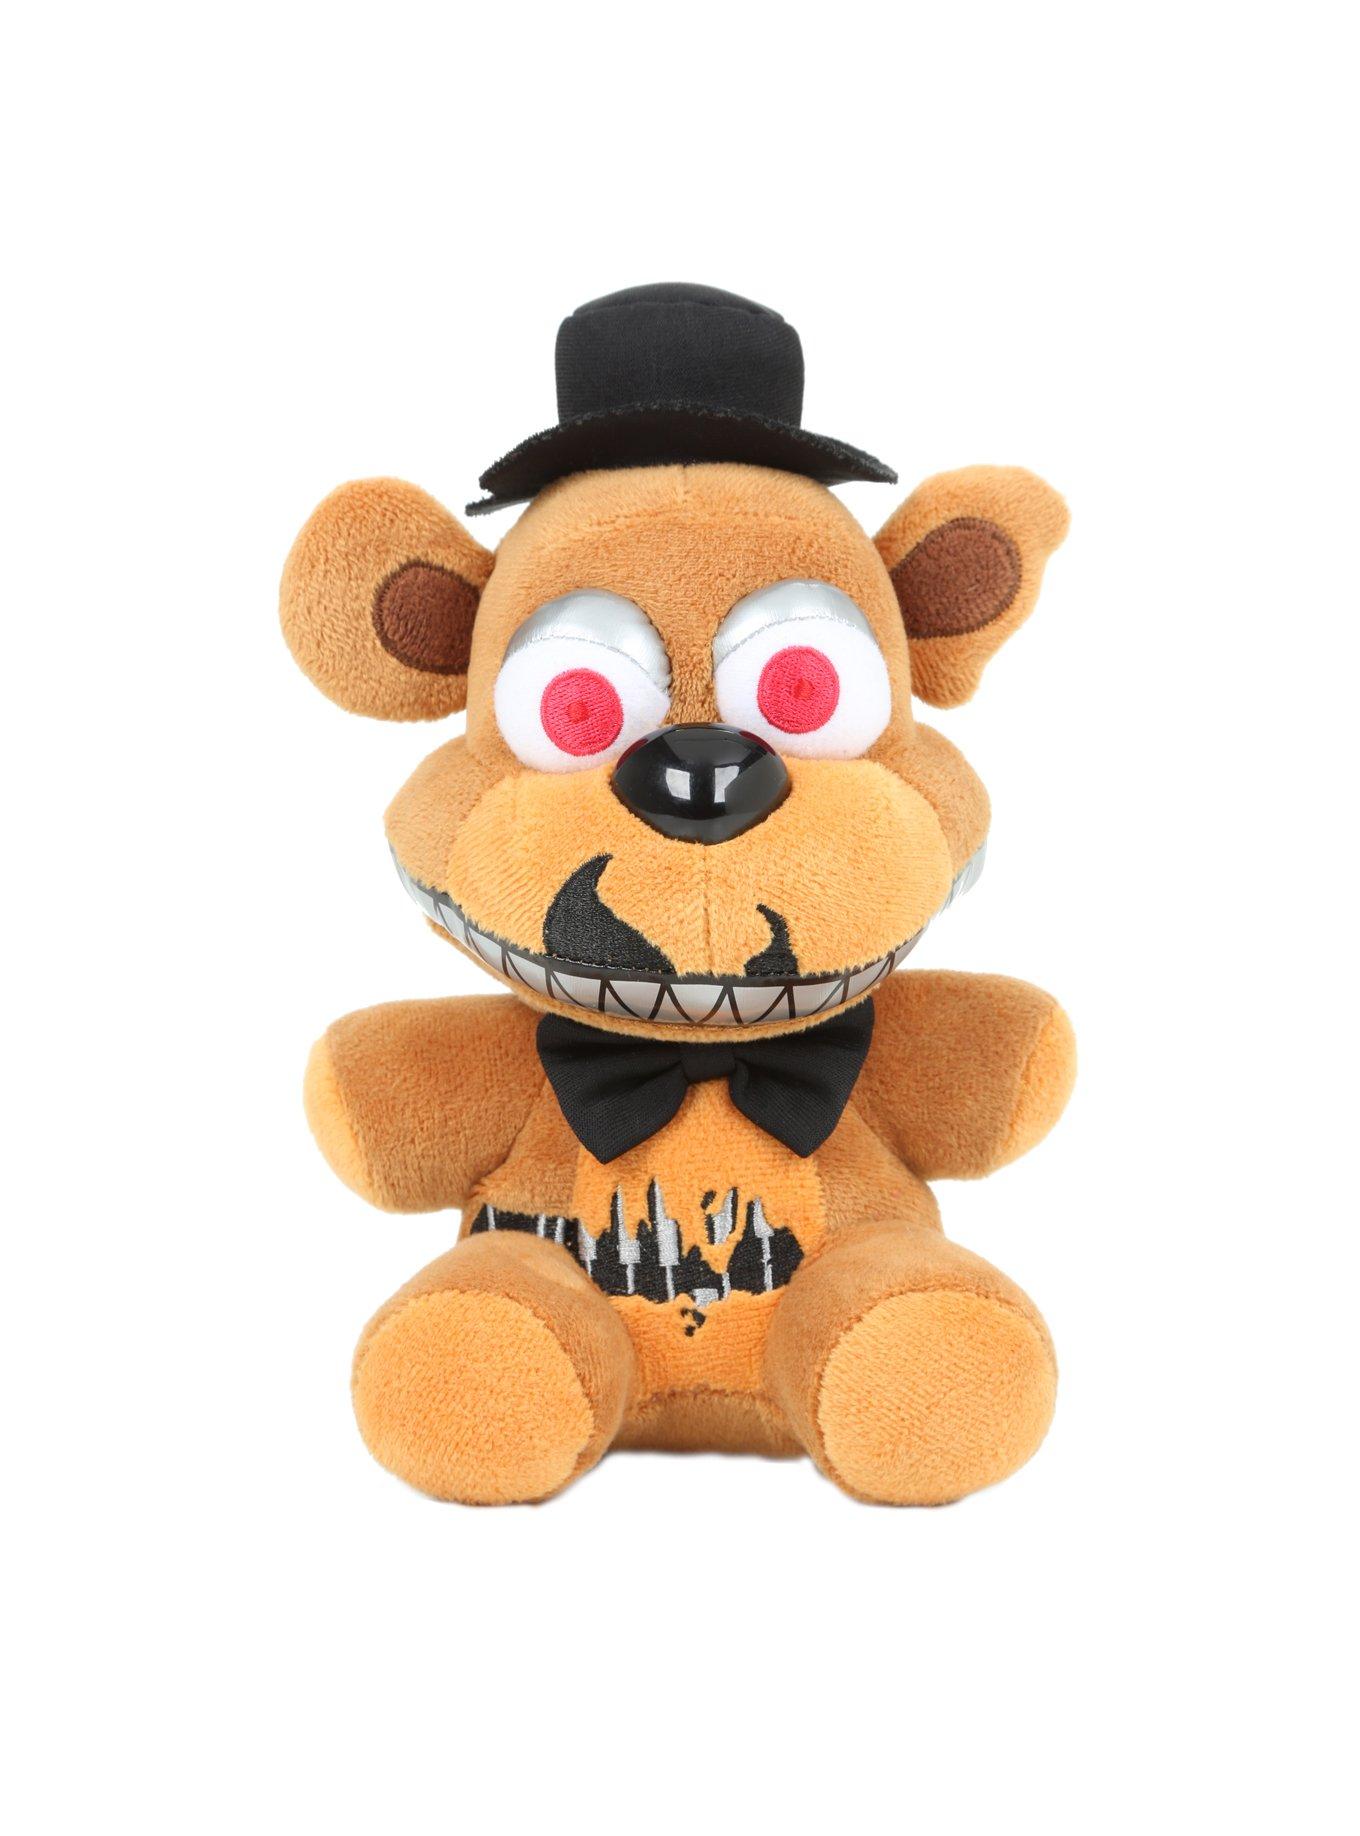 Funko Five Nights at Freddy's - Nightmare Freddy Plush Figure Toy